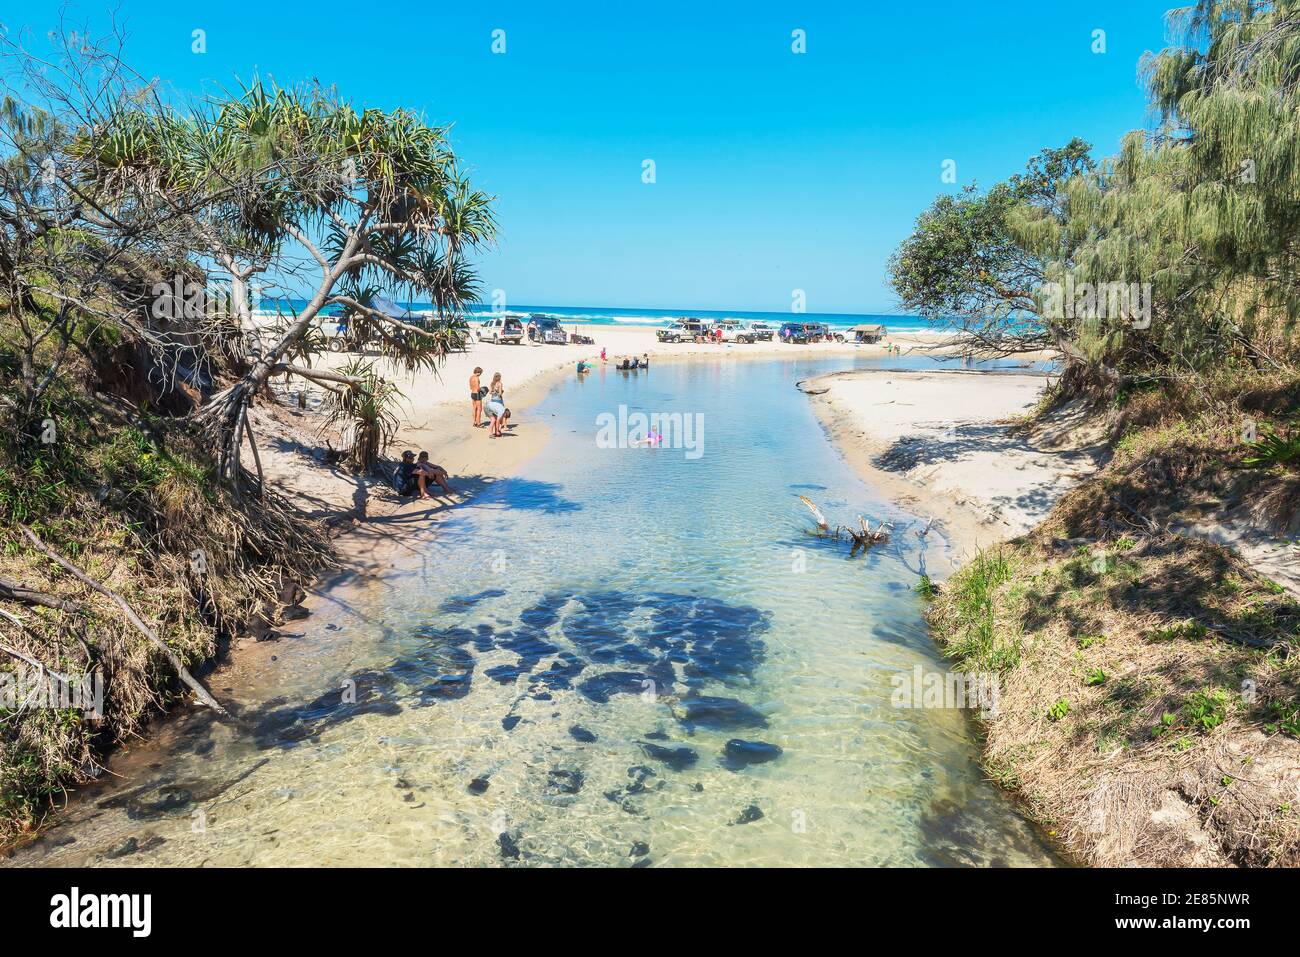 People enjoying Eli Creek, Great Sandy National Park, Fraser Island, Queensland, Australia, Stock Photo